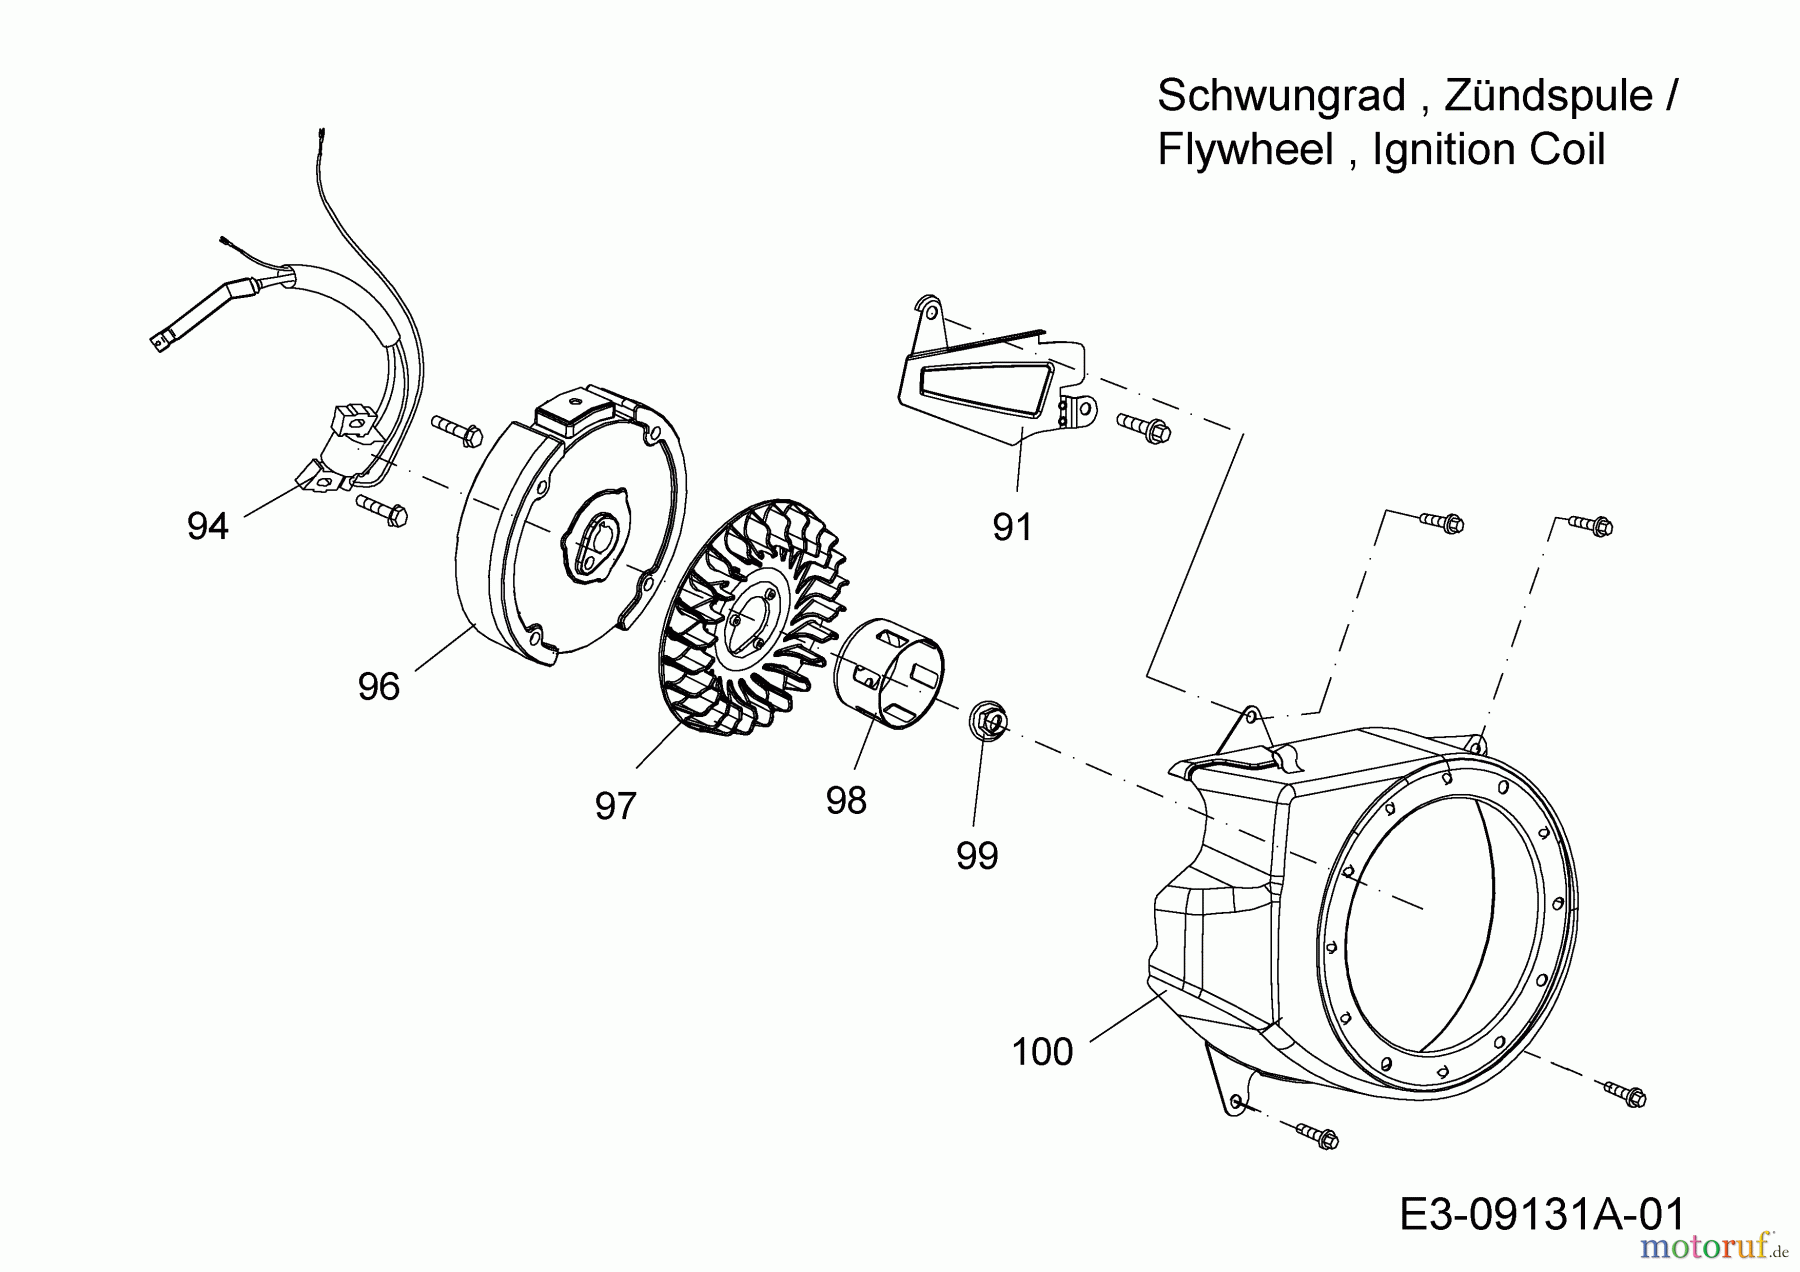  MTD-Engines Horizontal 170-AUA 752Z170-AUA  (2015) Flywheel, Ignition coil